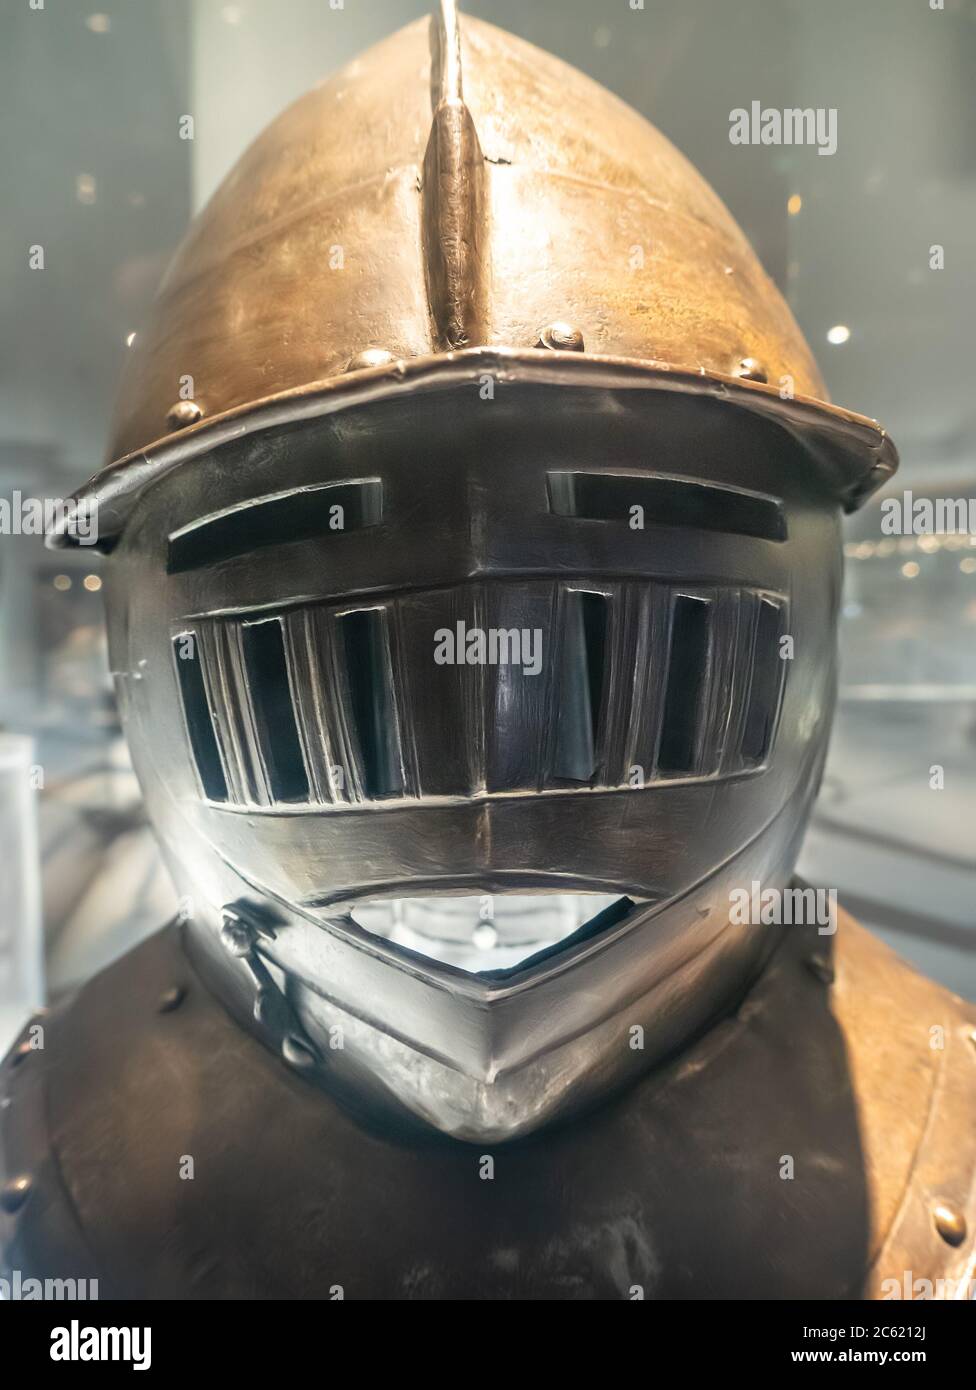 Iron helmet of medieval knight, close up. Stock Photo